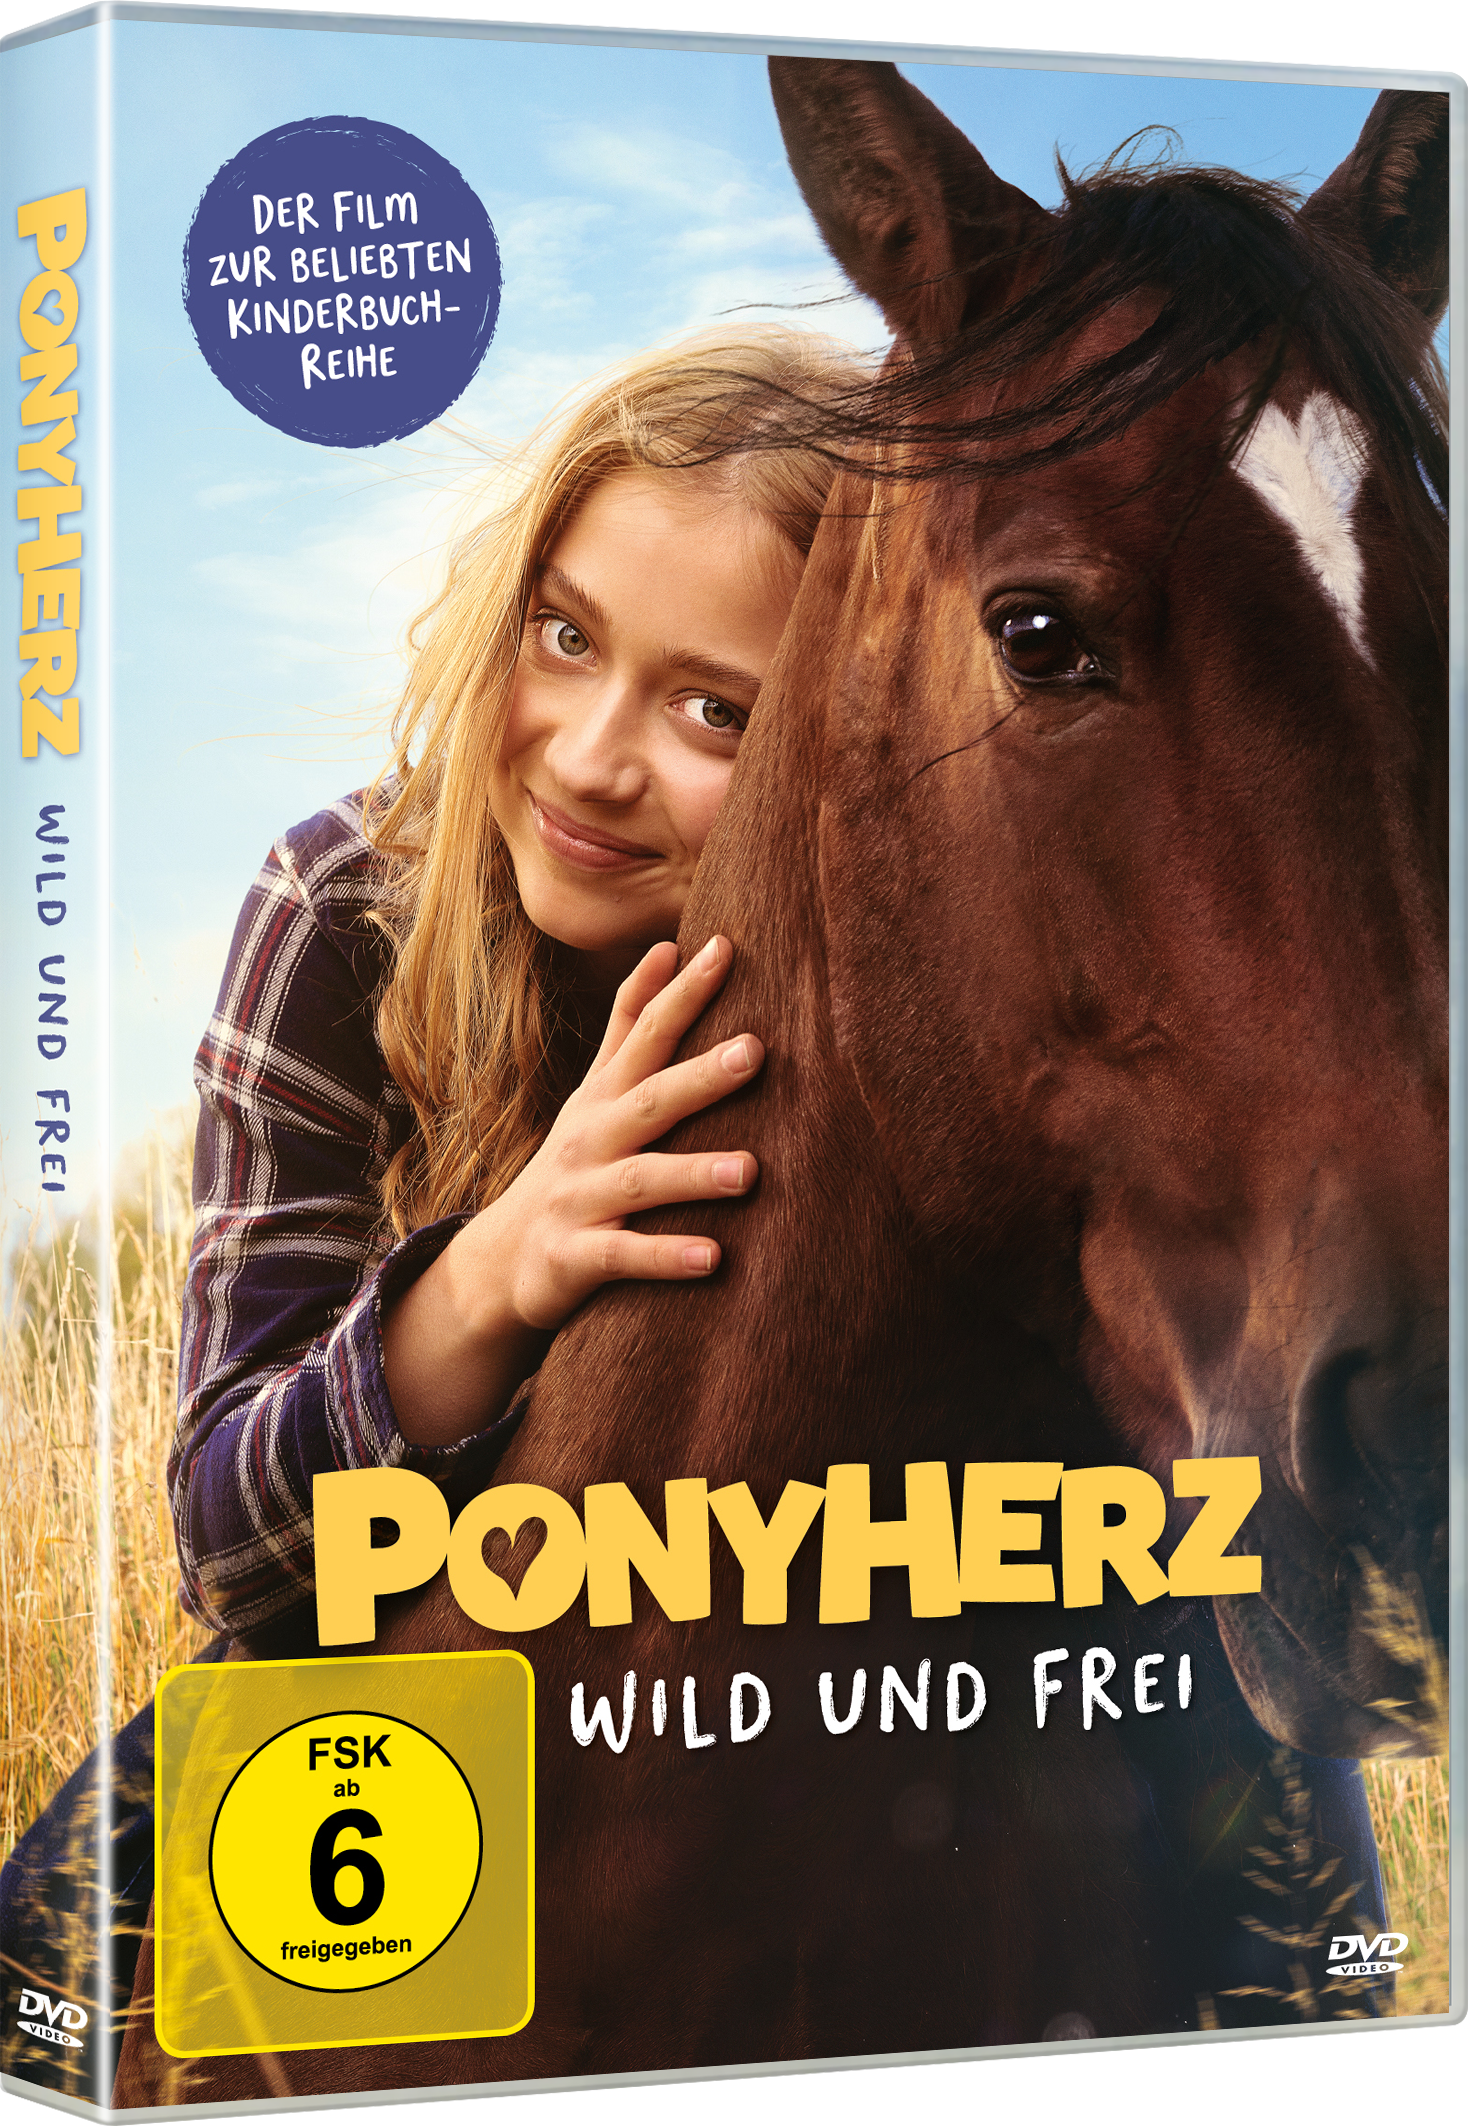 Ponyherz (DVD) Image 2